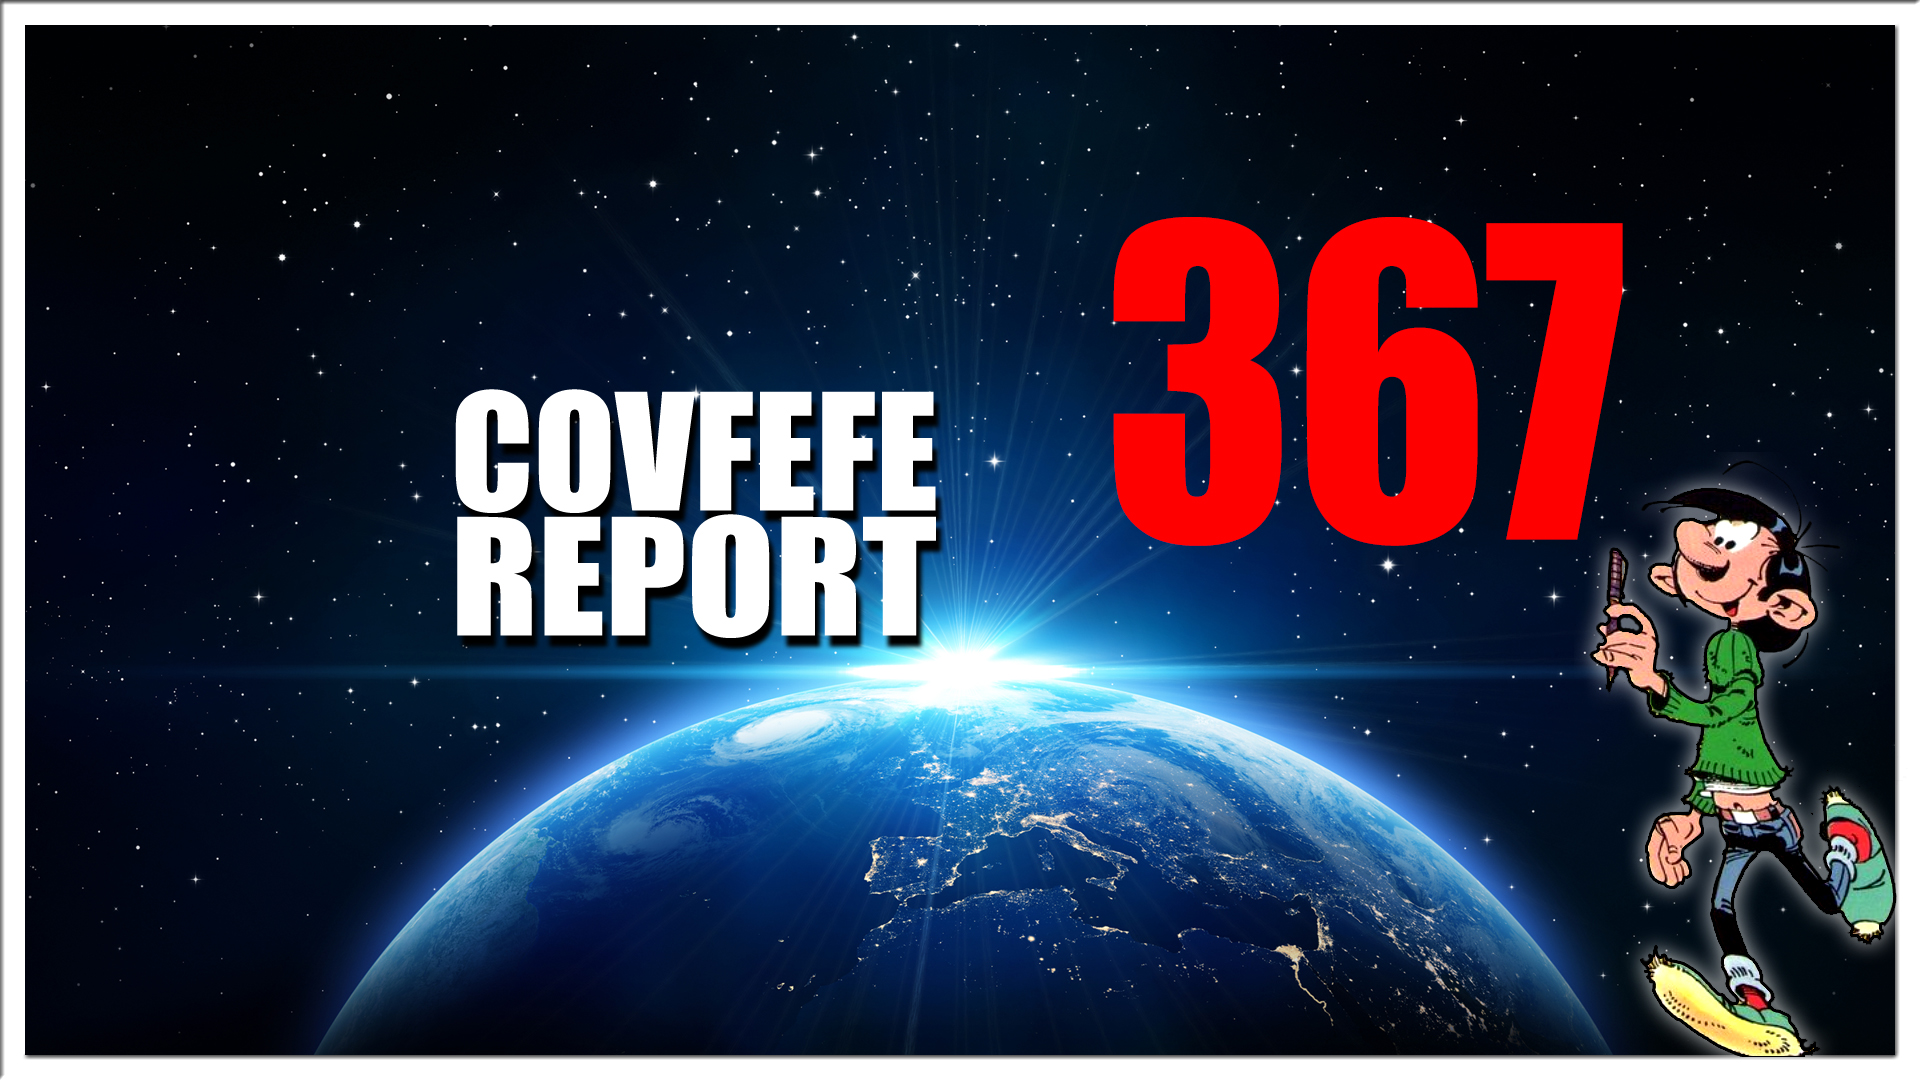 Covfefe Report 367. Next week, Bigger, The shot heard around the world